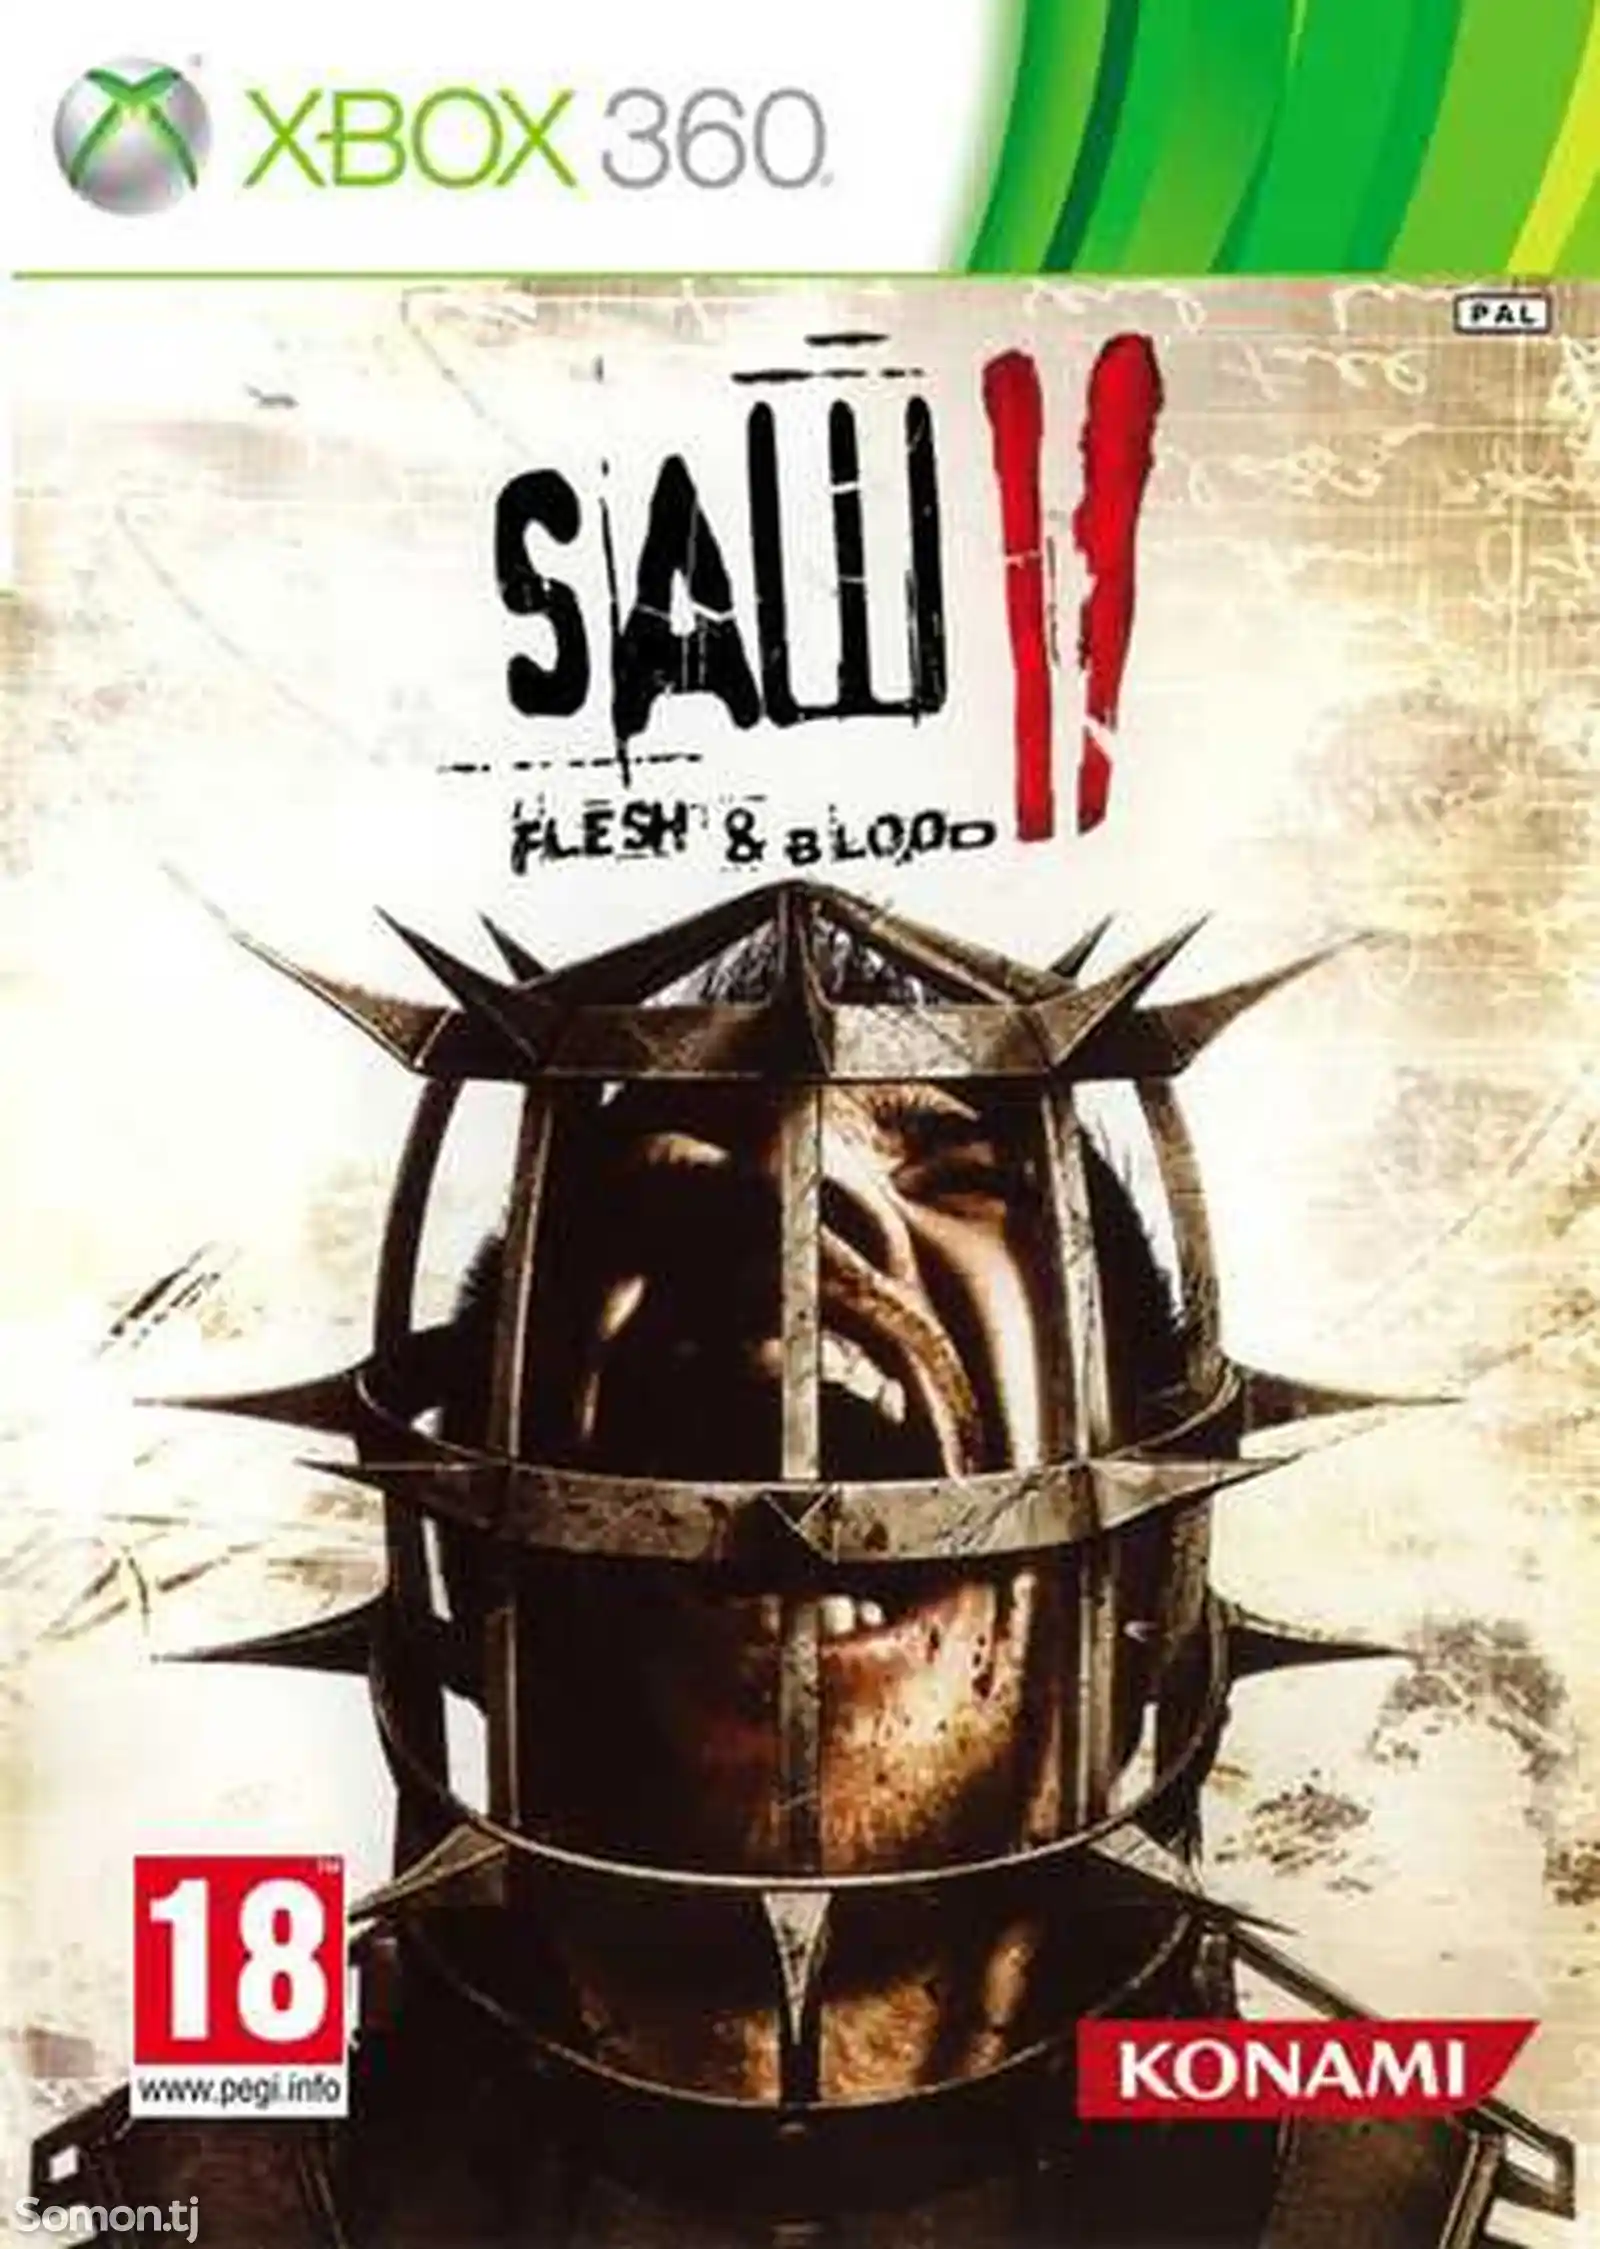 Игра Saw 2 flesh and blood для прошитых Xbox 360